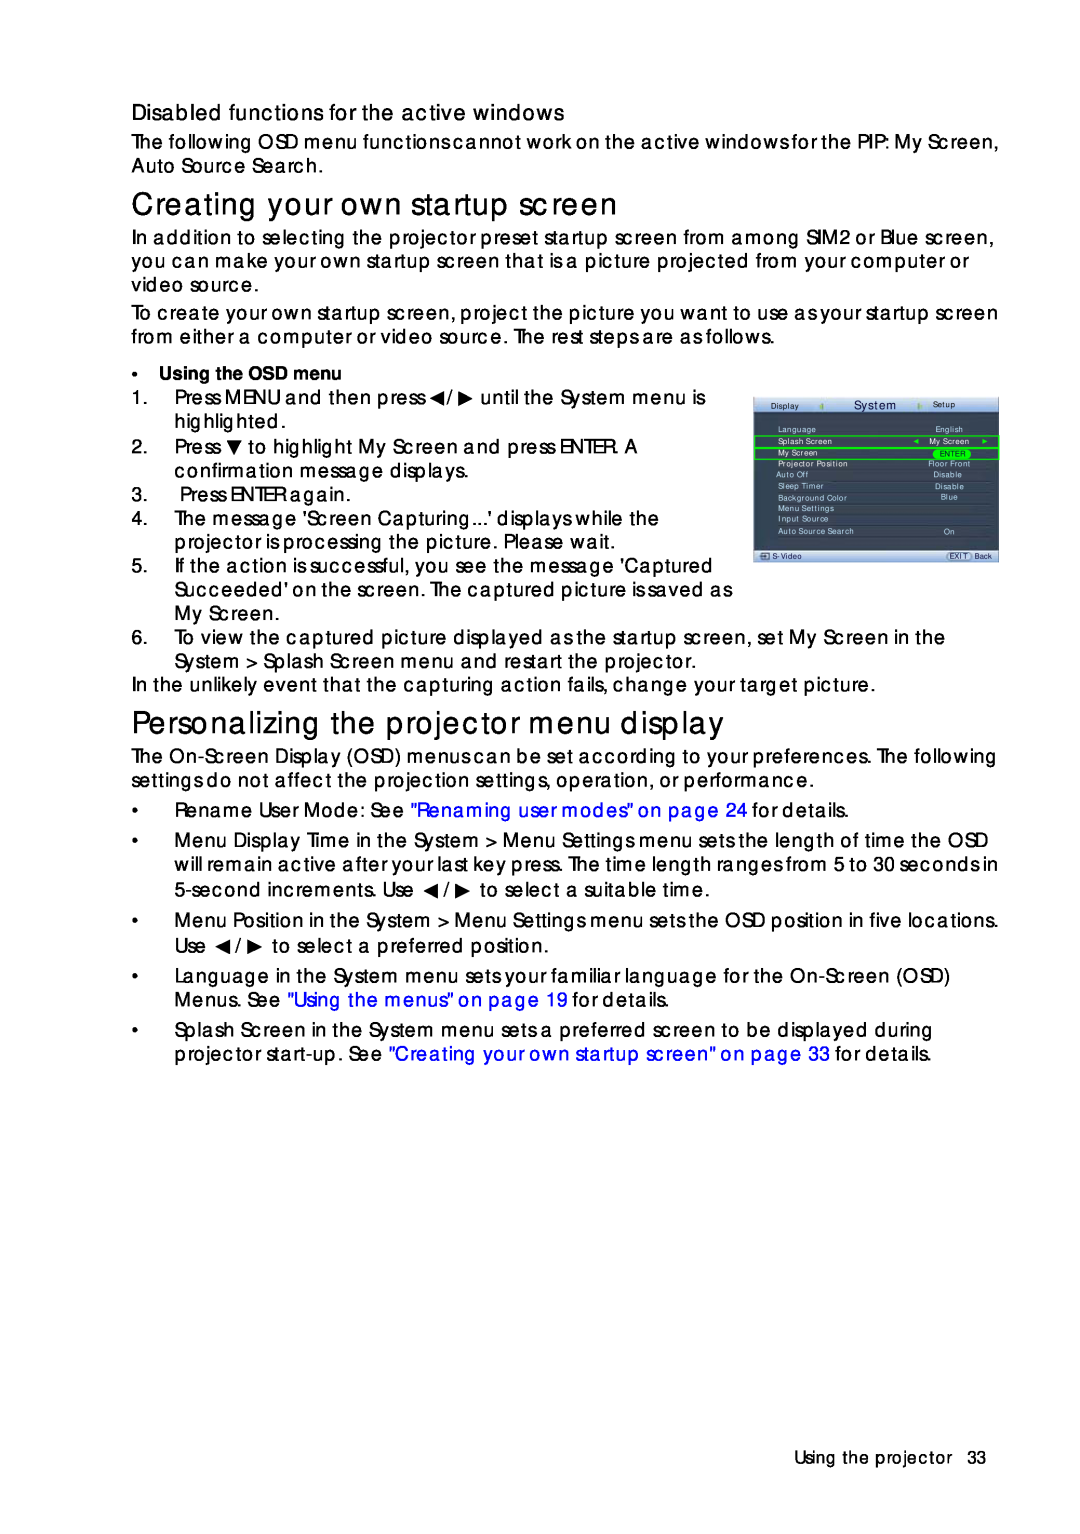 Sim2 Multimedia D60 user manual Creating your own startup screen, Personalizing the projector menu display 